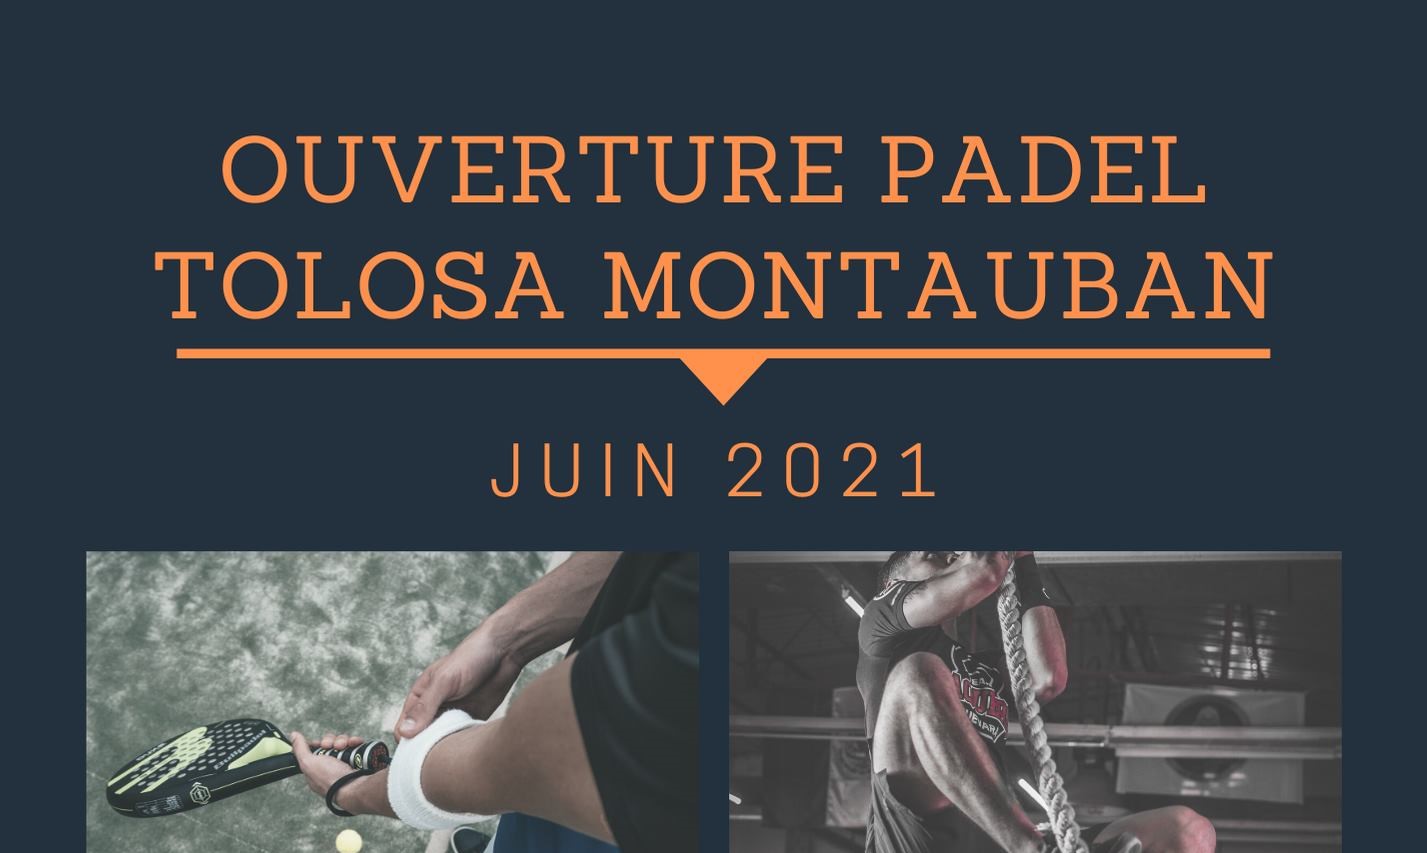 Padel Tolosa Montauban para junho de 2021